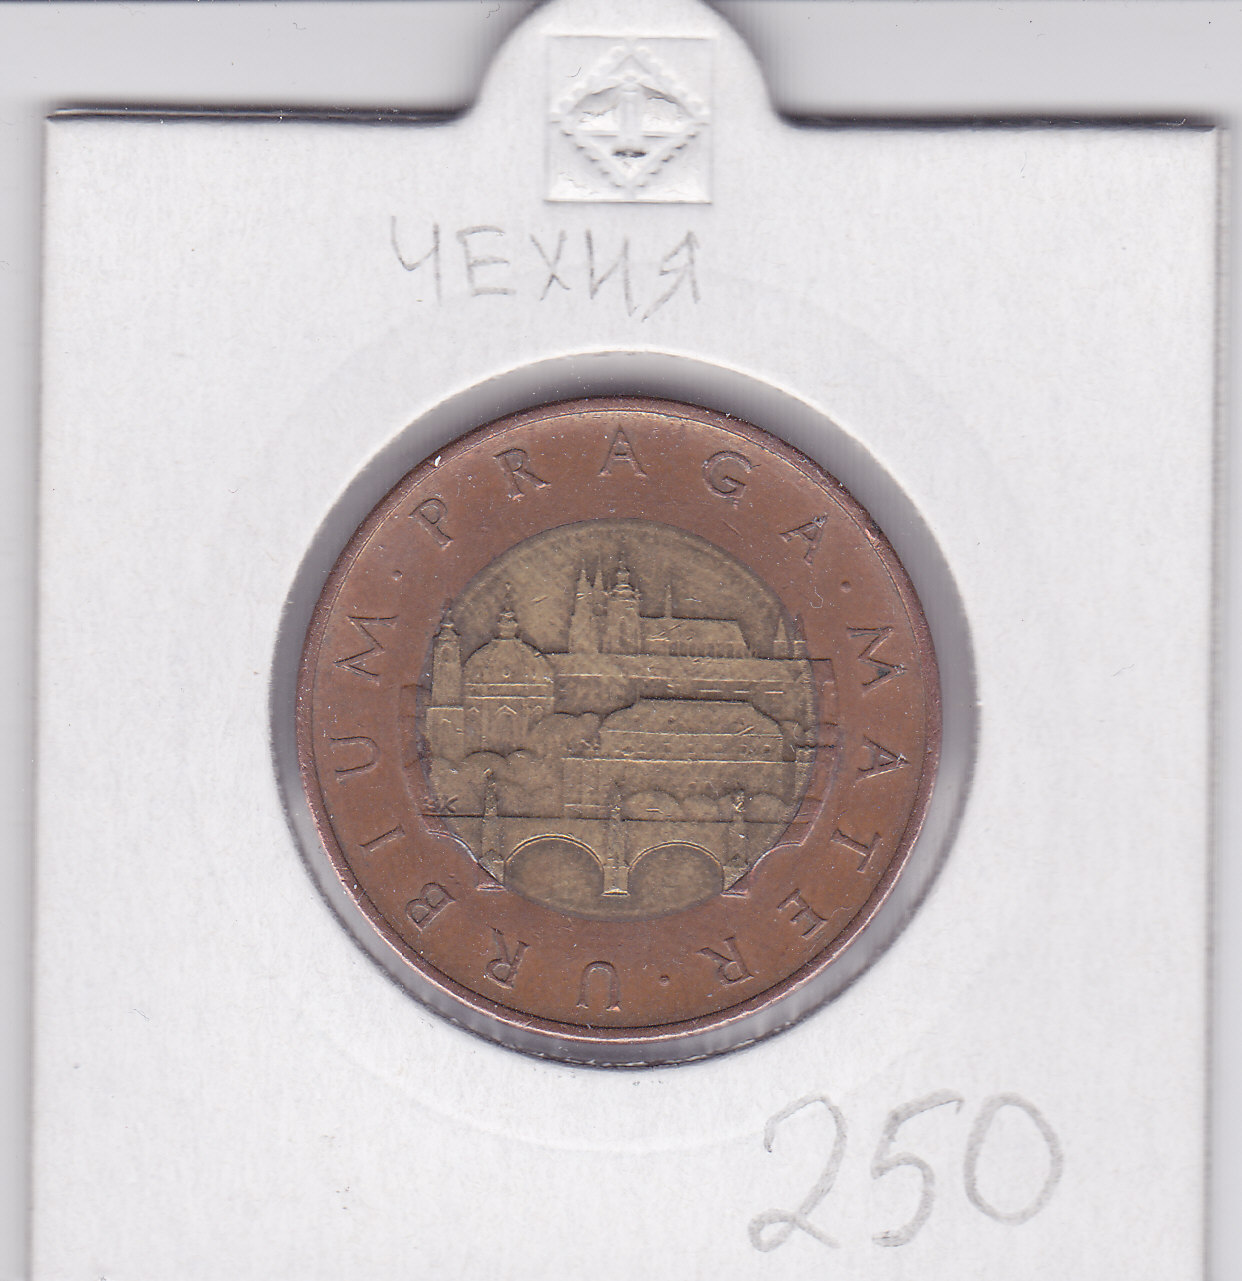 50 крон 1993 года Чехия